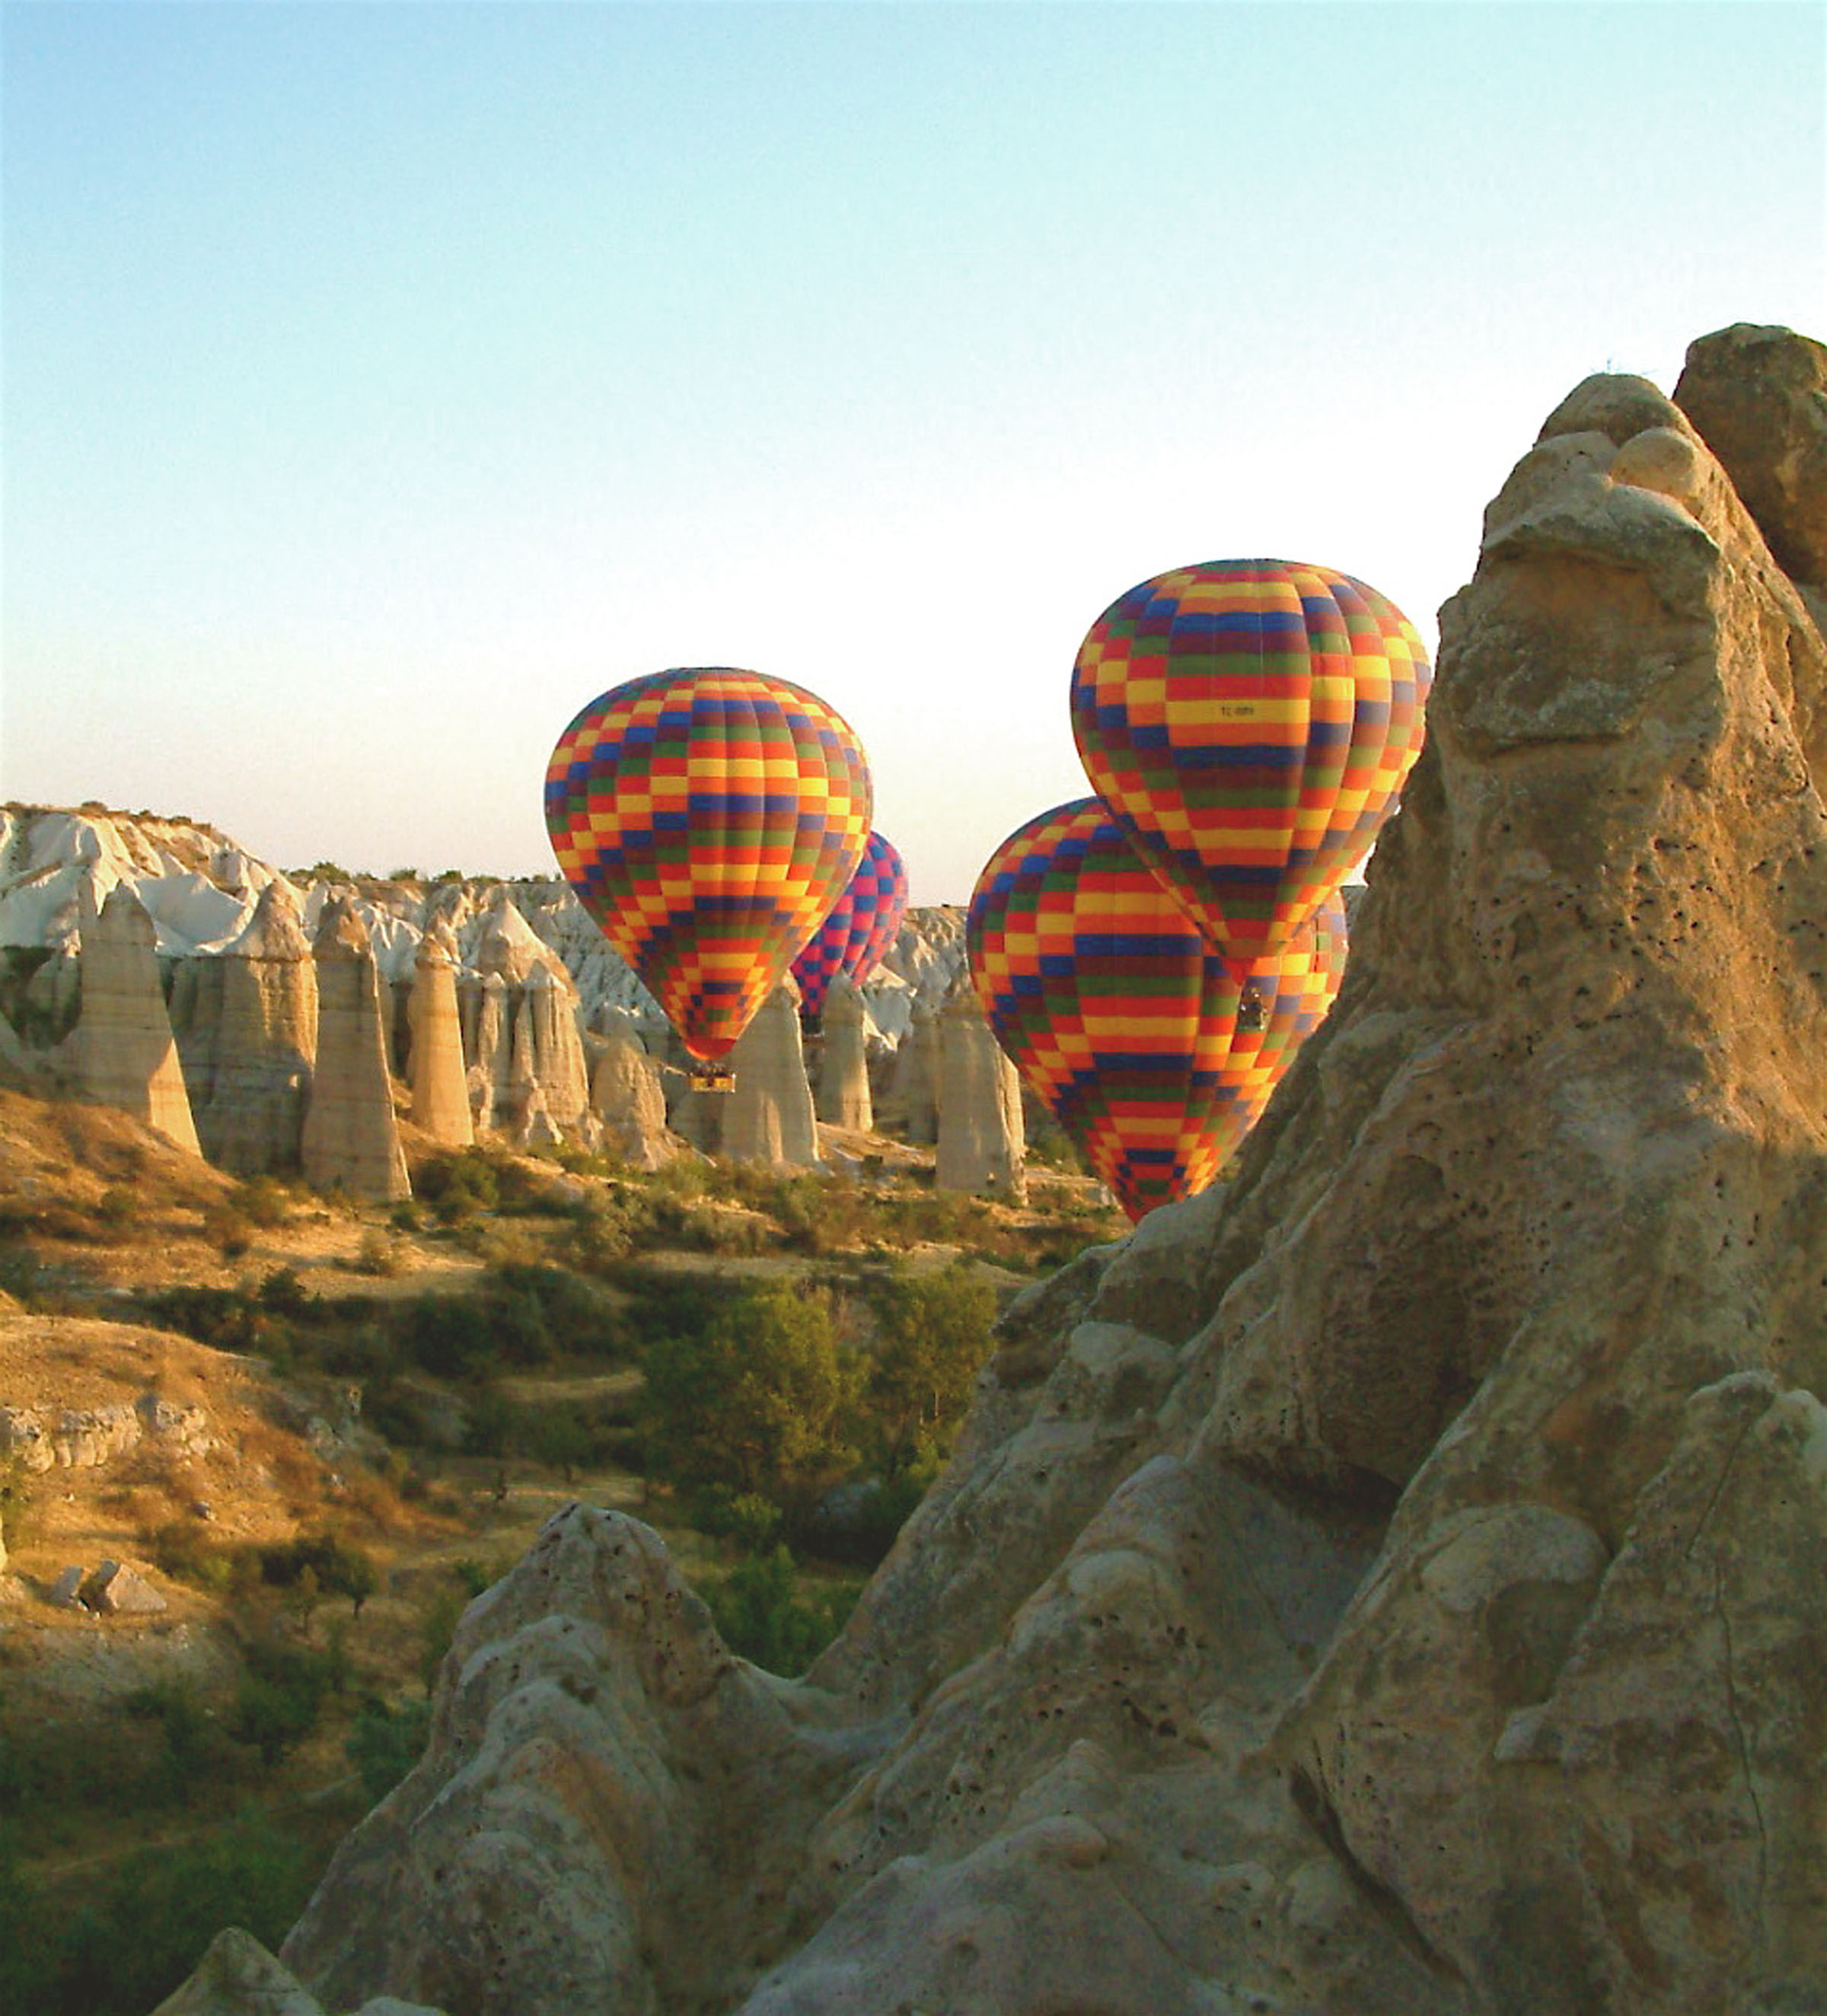 Marvel at Cappadocia's Fairy Chimneys, tall pillars of tuff topped with jaunty basalt caps.